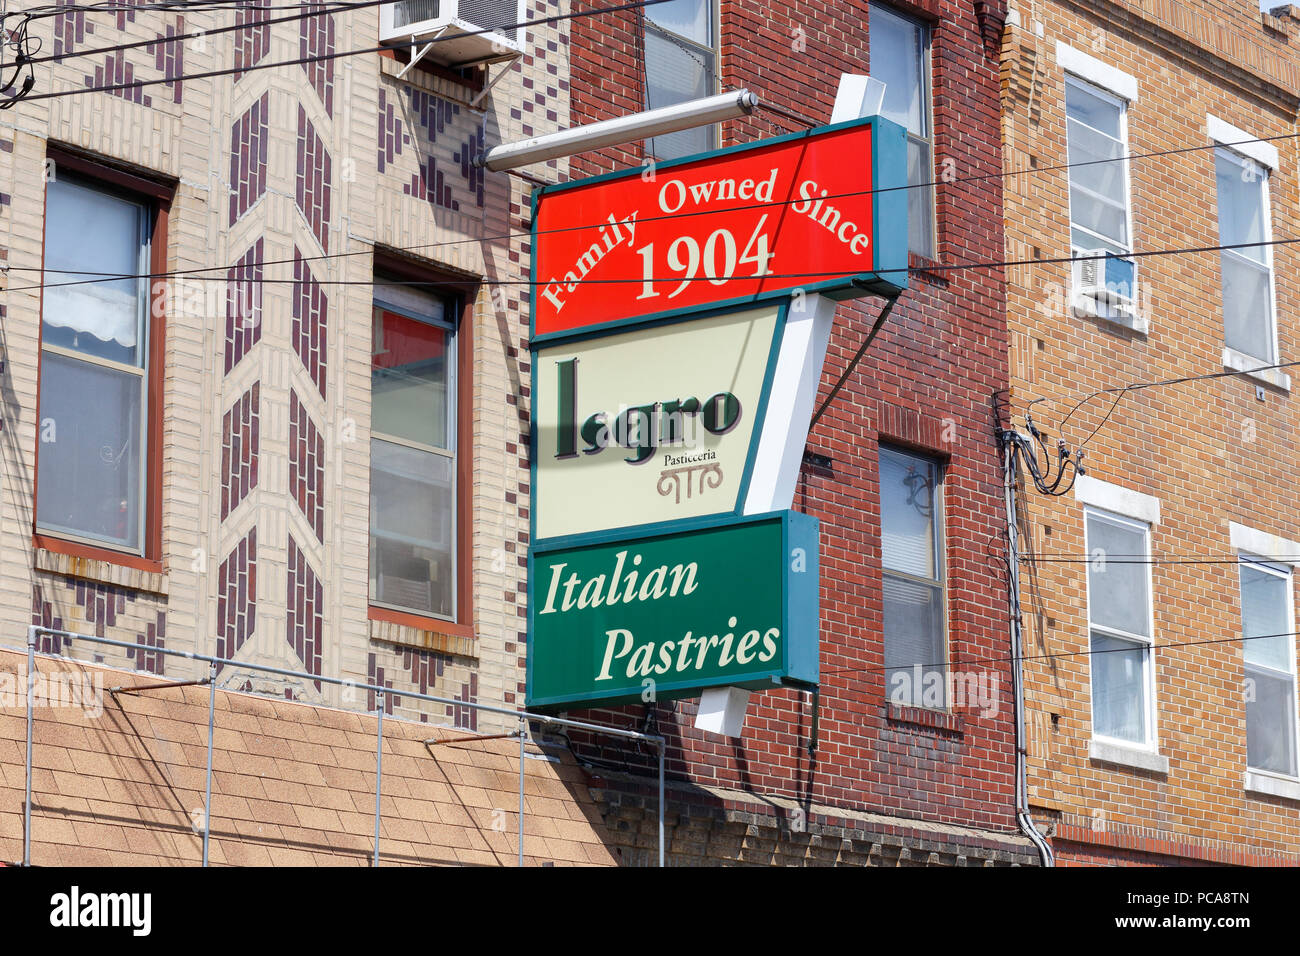 Isgro Pastries storefront sign, philadelphia, pa Stock Photo